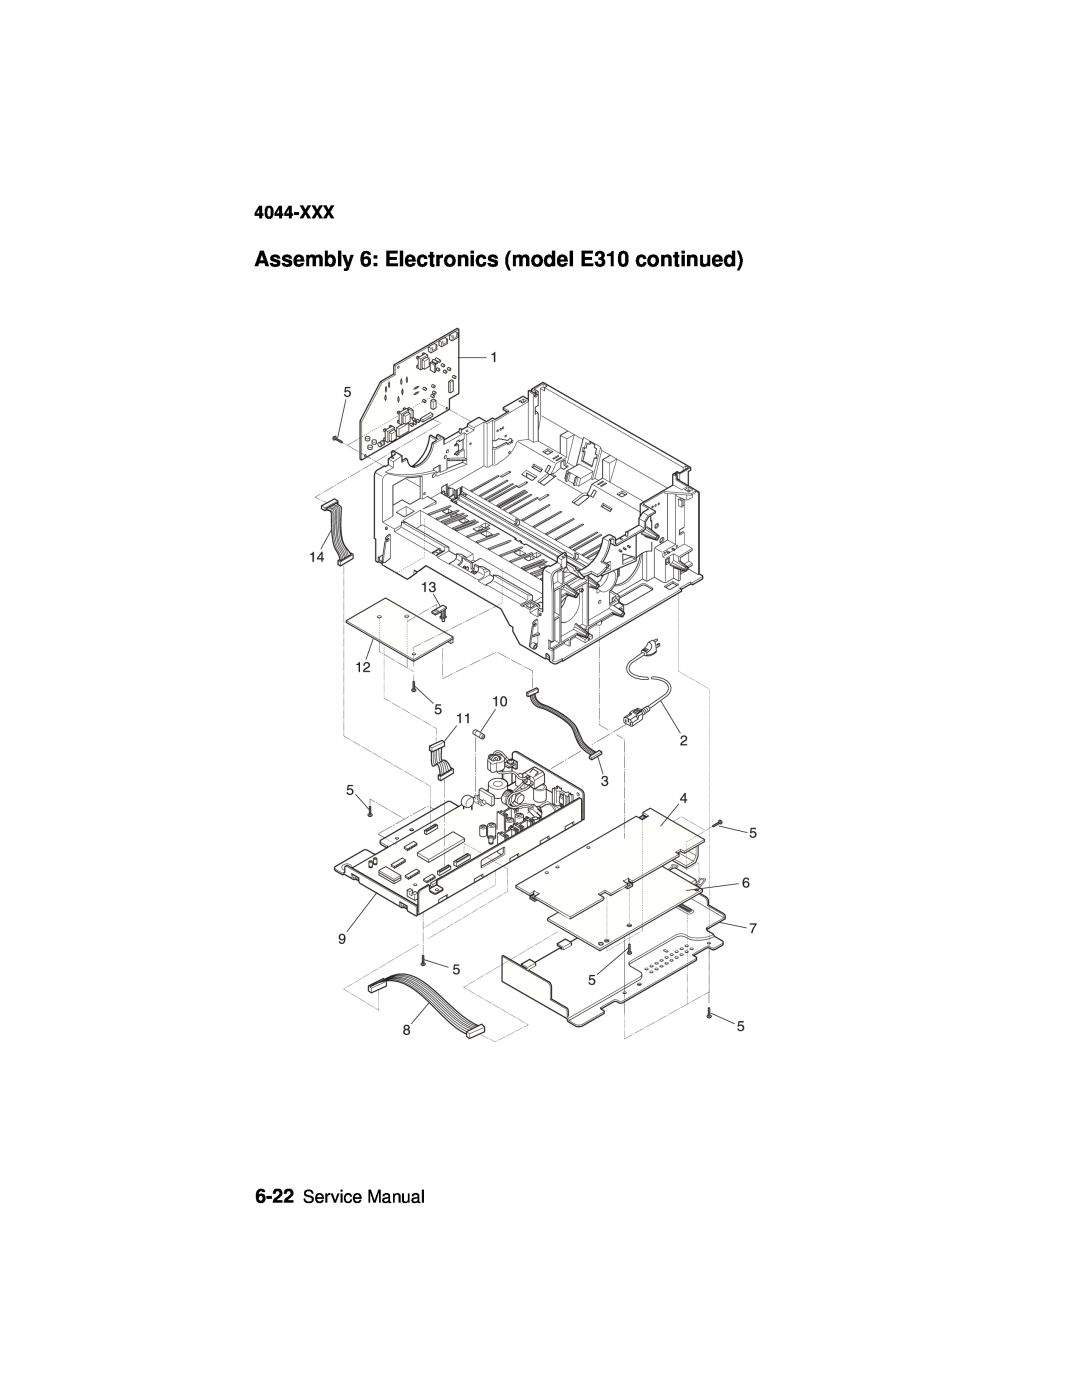 Lexmark 4044-XXX manual Assembly 6: Electronics model E310 continued, Service Manual 